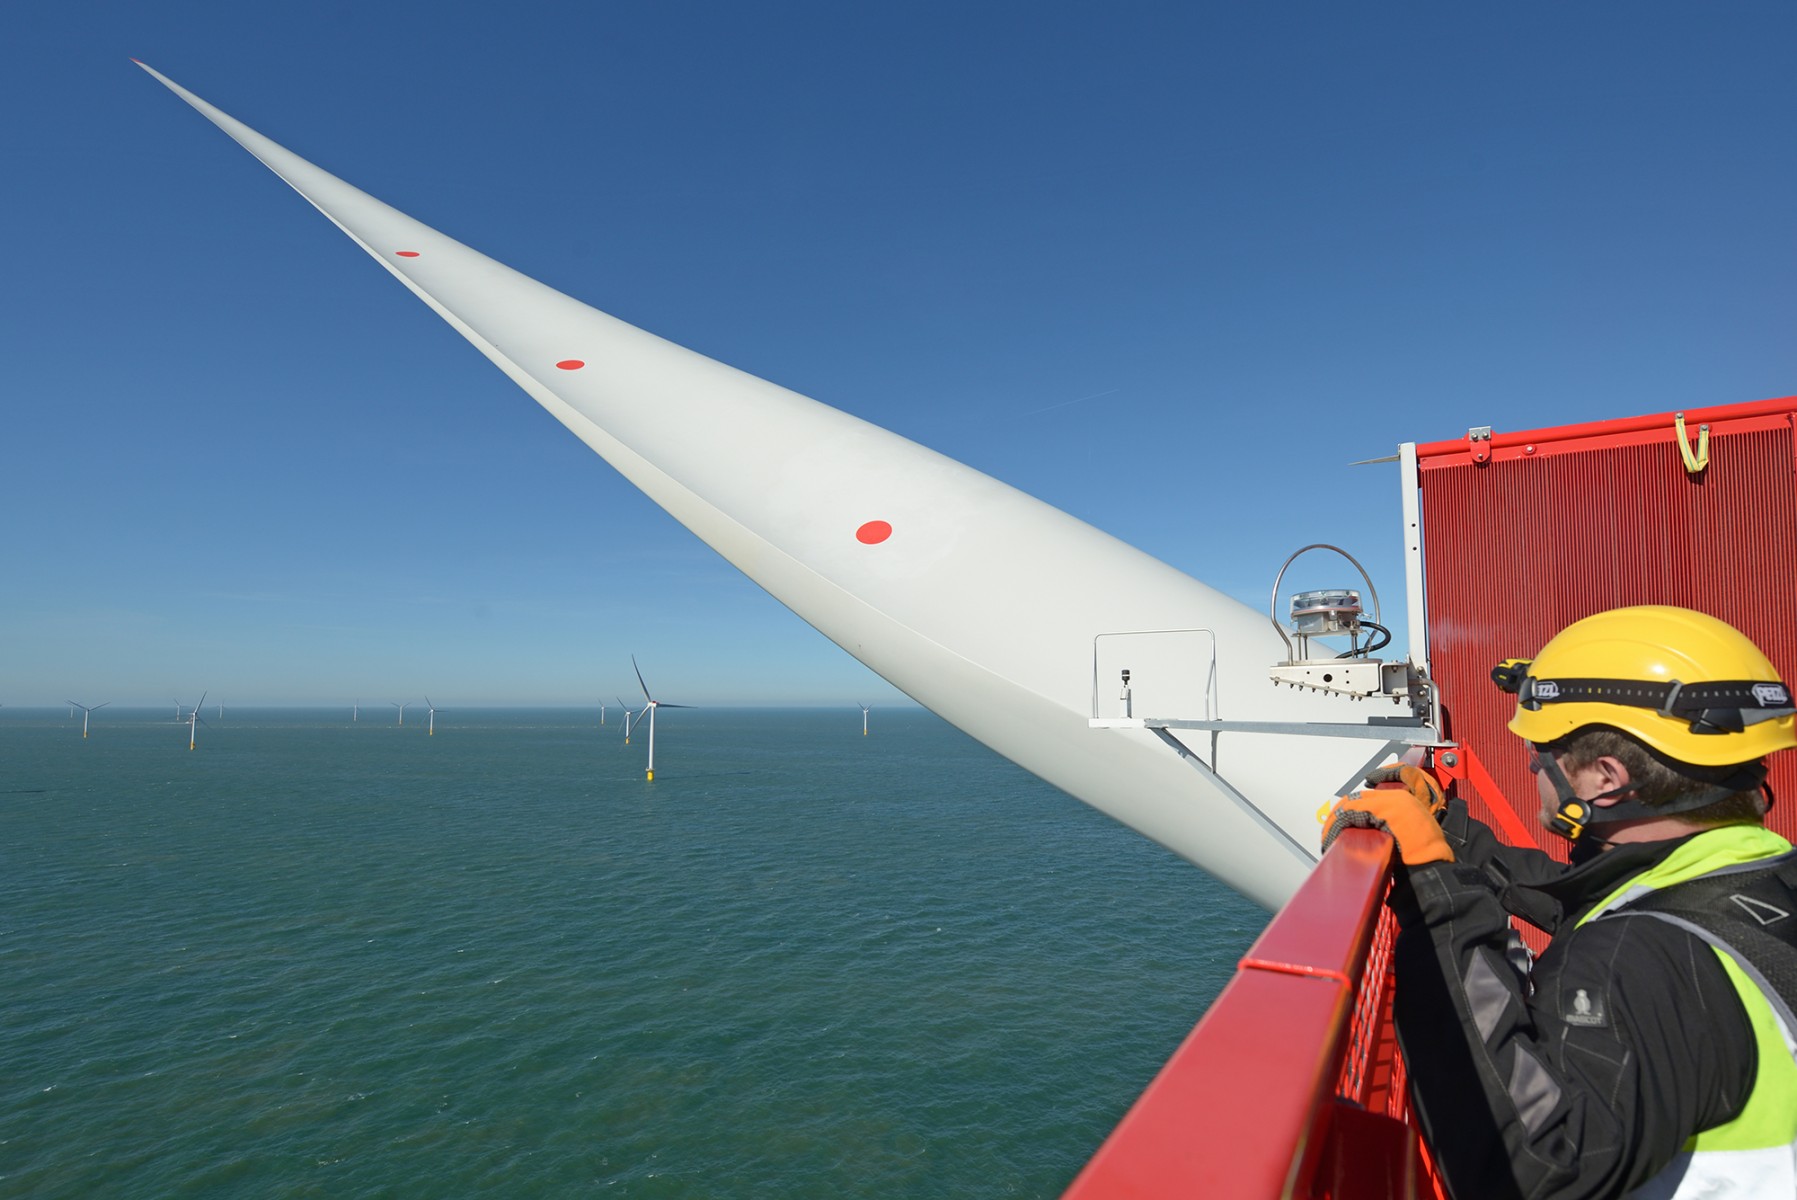 An offshore wind technician on top of a wind turbine